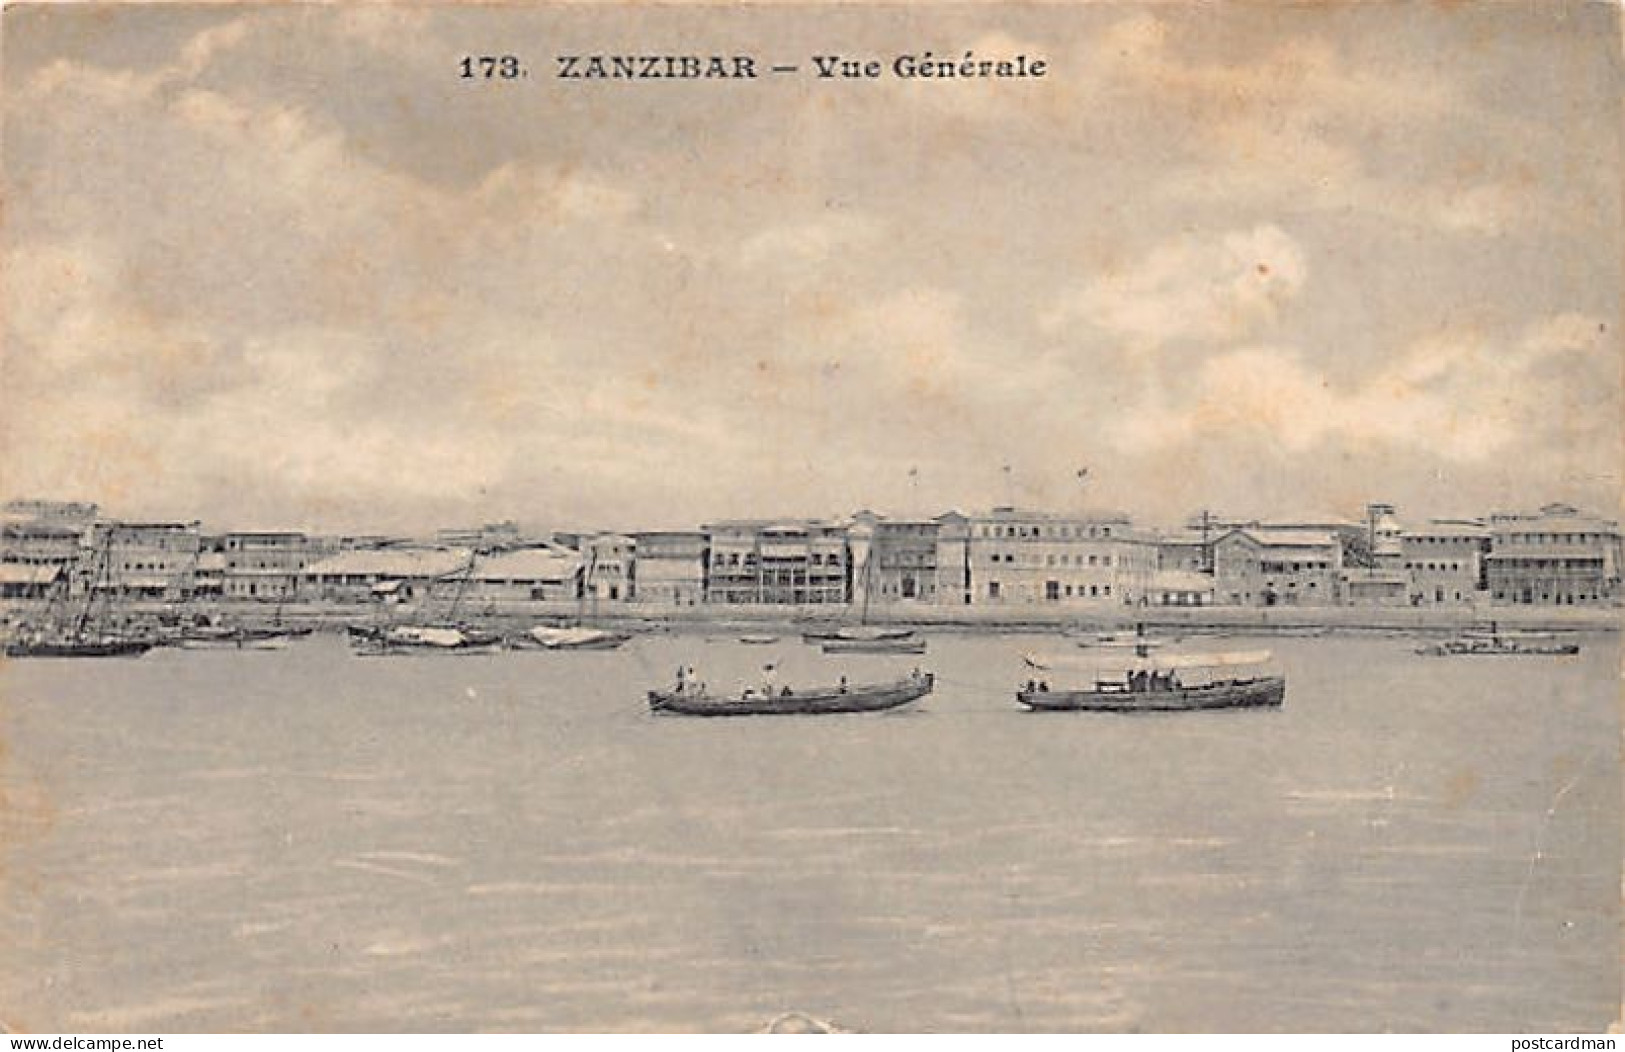 Tanzania - ZANZIBAR - General View From The Sea - Publ. Messageries Maritimes 173 - Tanzanie